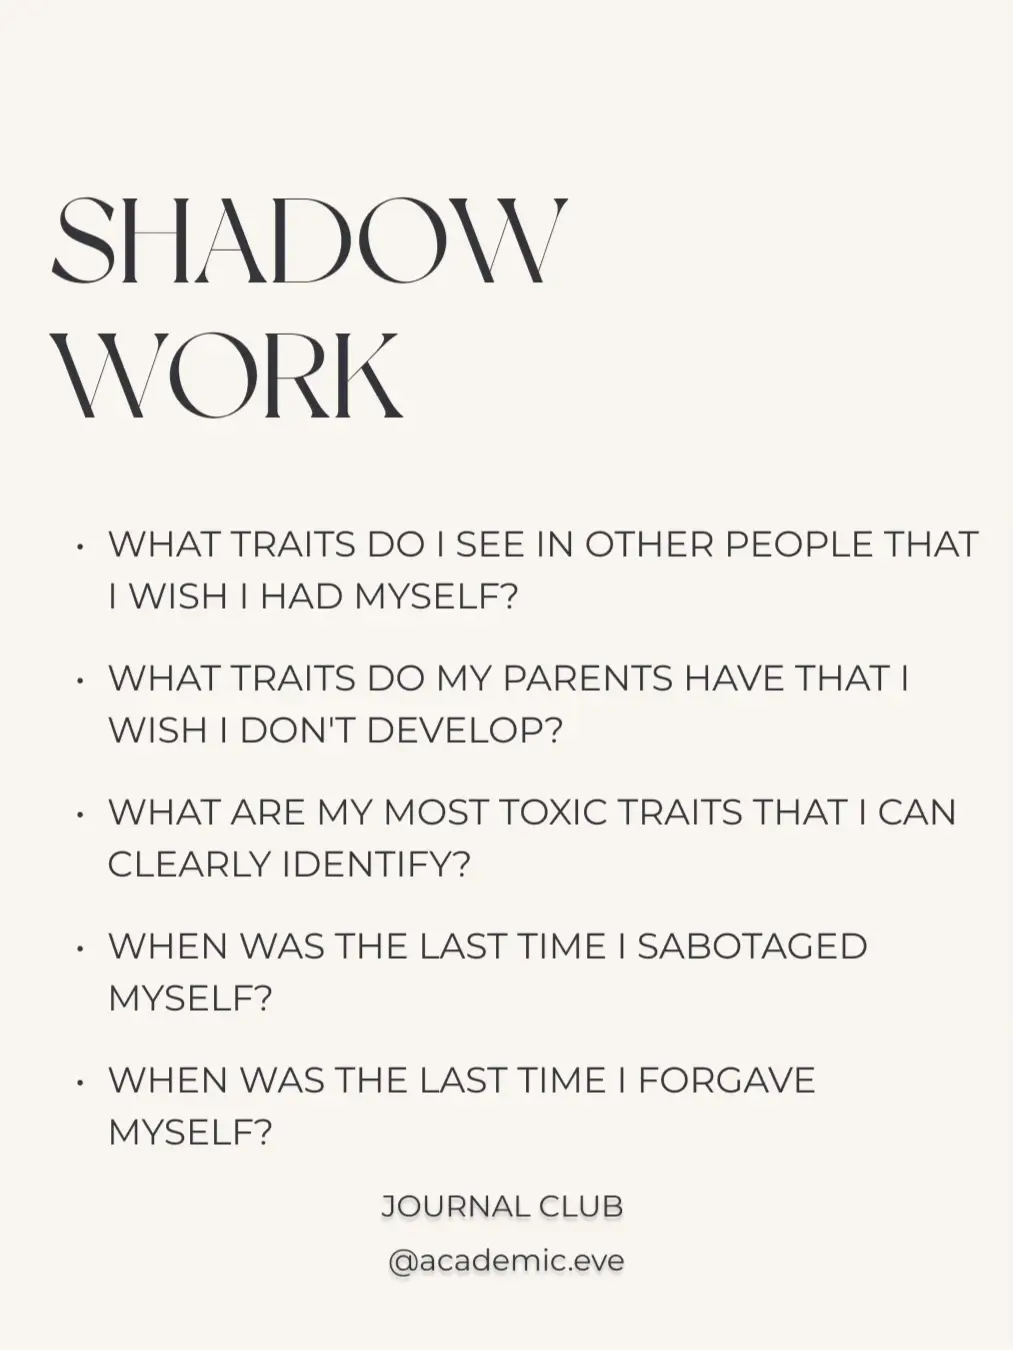 Shadow work journal - Lemon8 Search